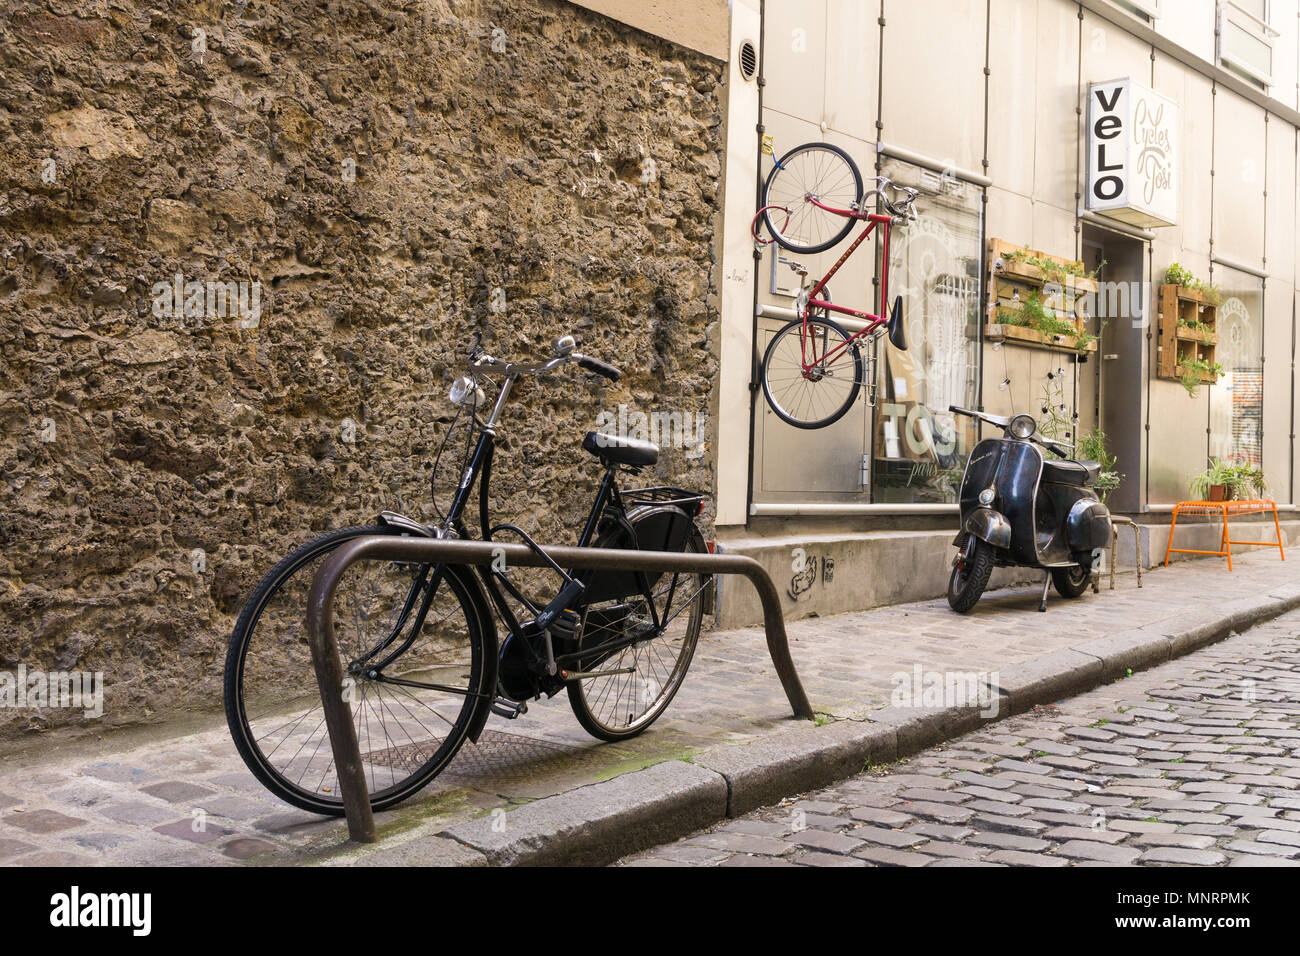 The Parisian Shop Making Made-to-Measure Bikes